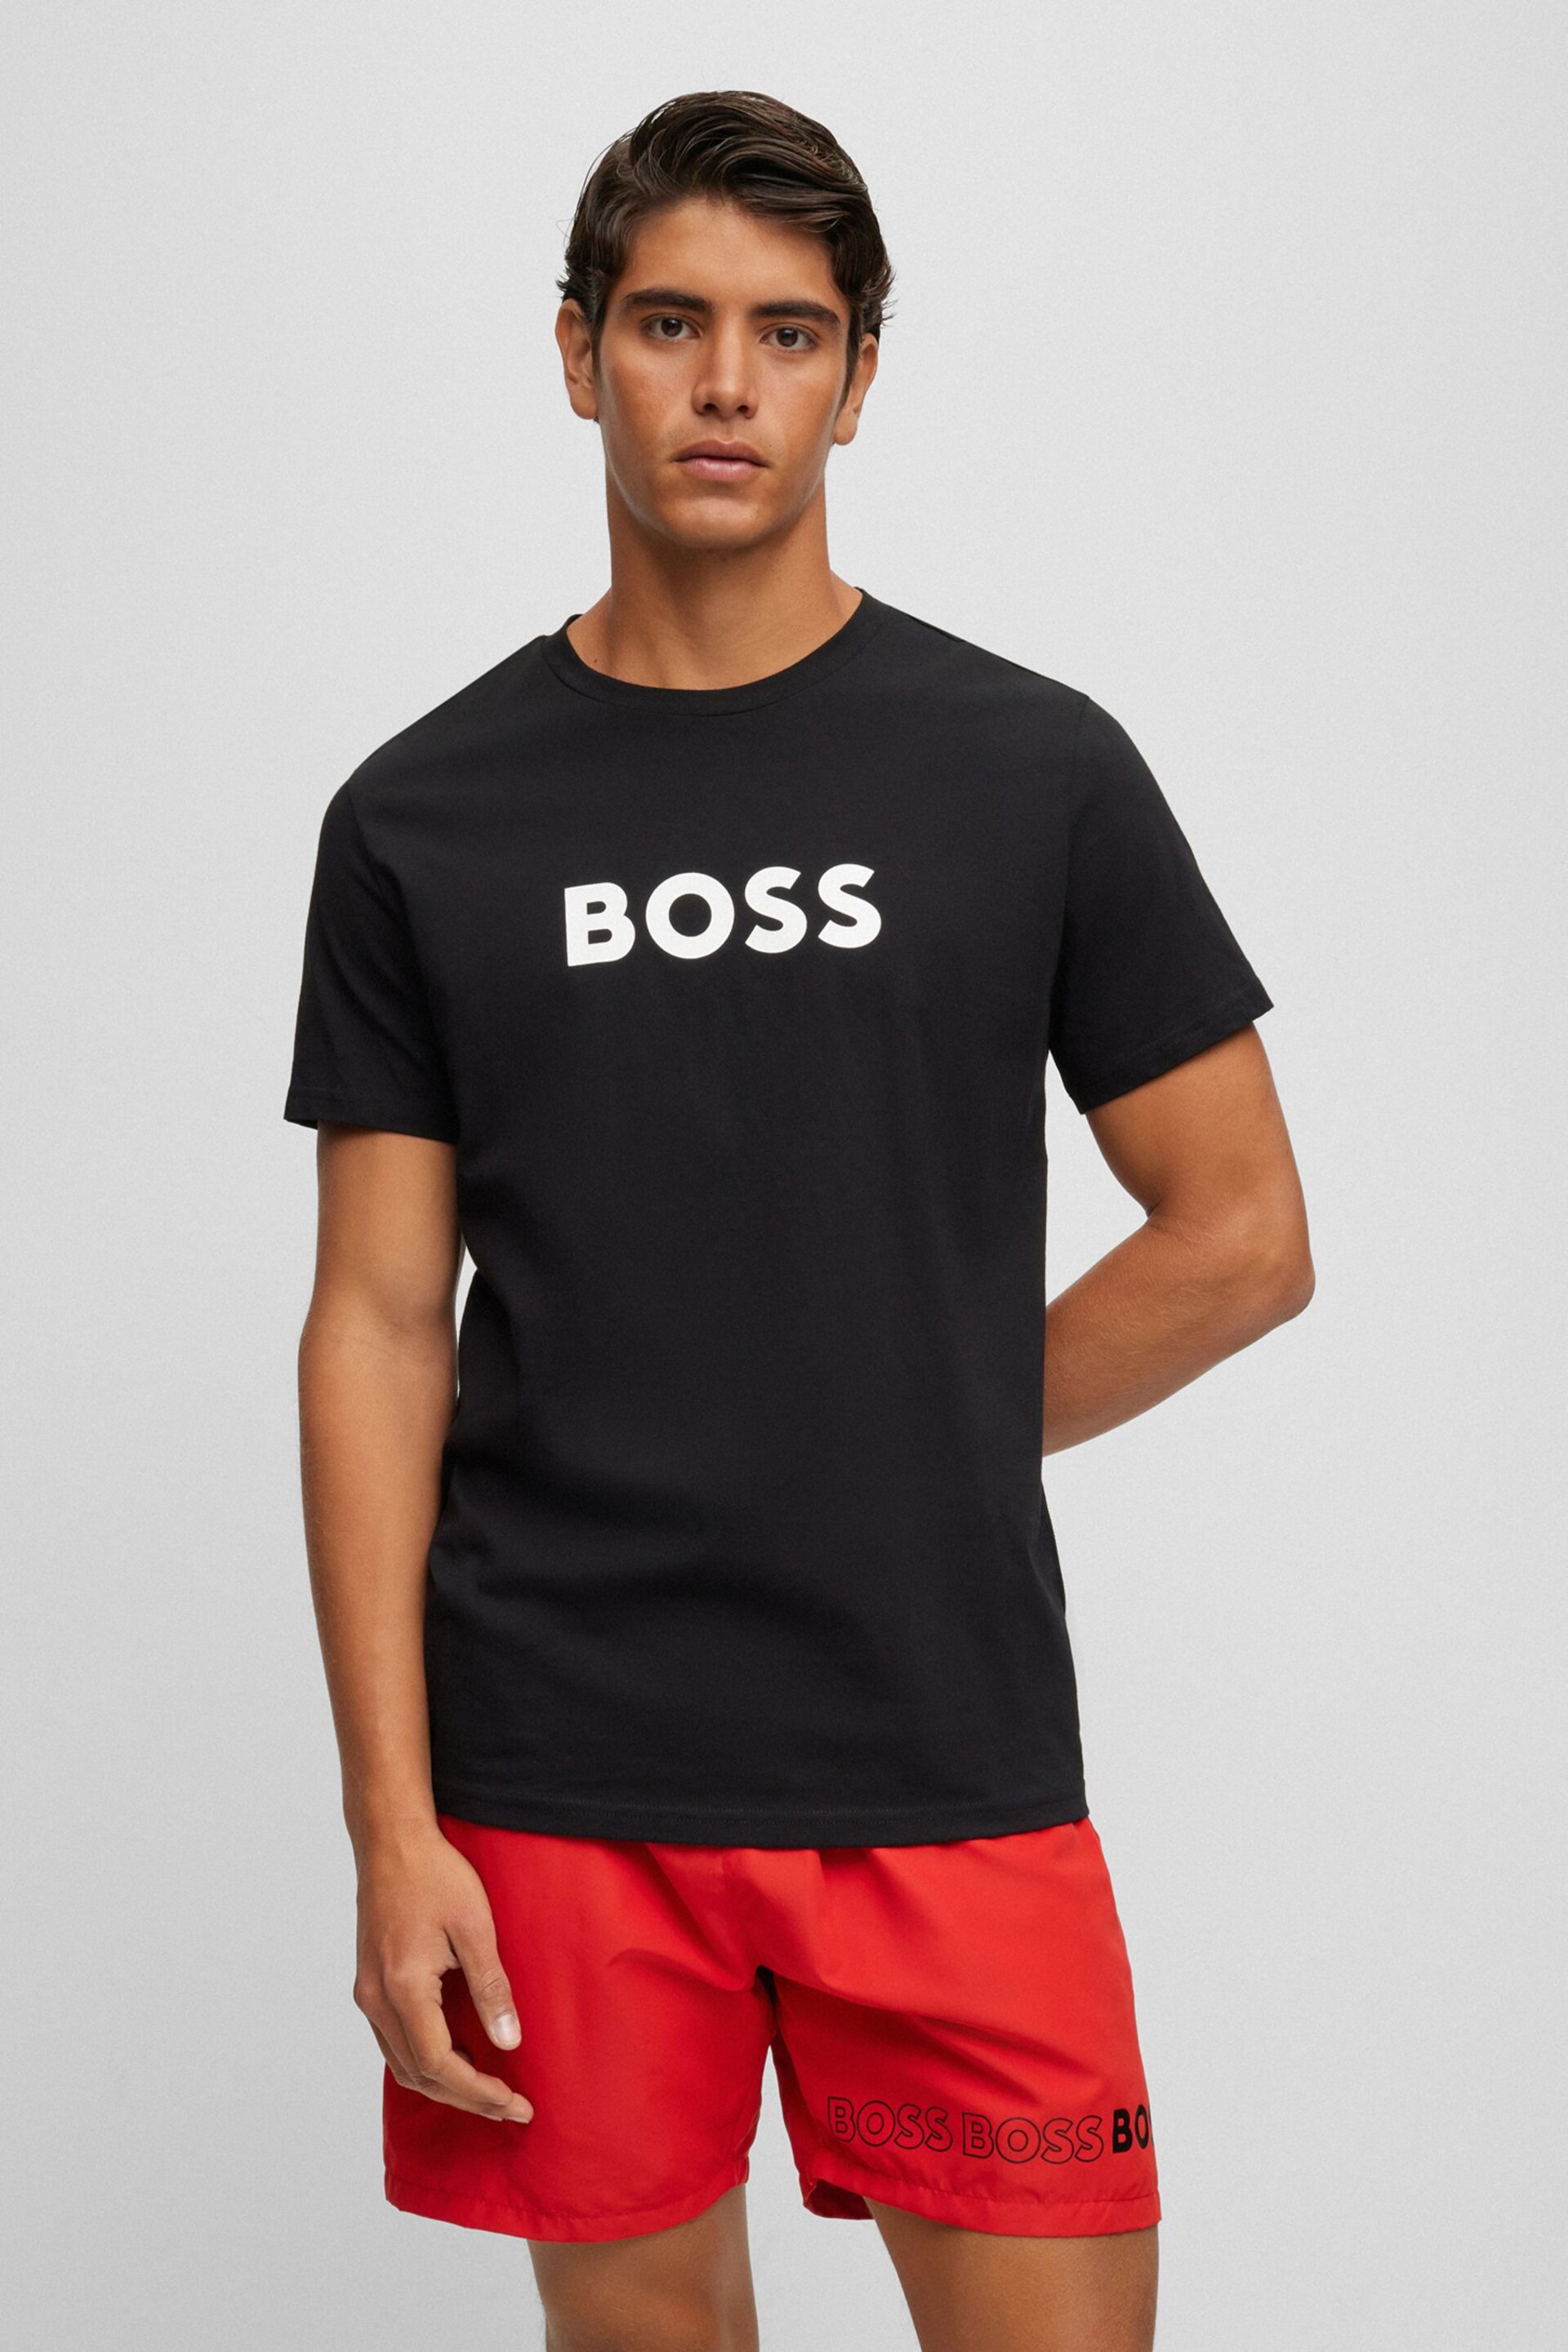 BOSS Black Large Chest Logo T-Shirt - Image 1 of 3